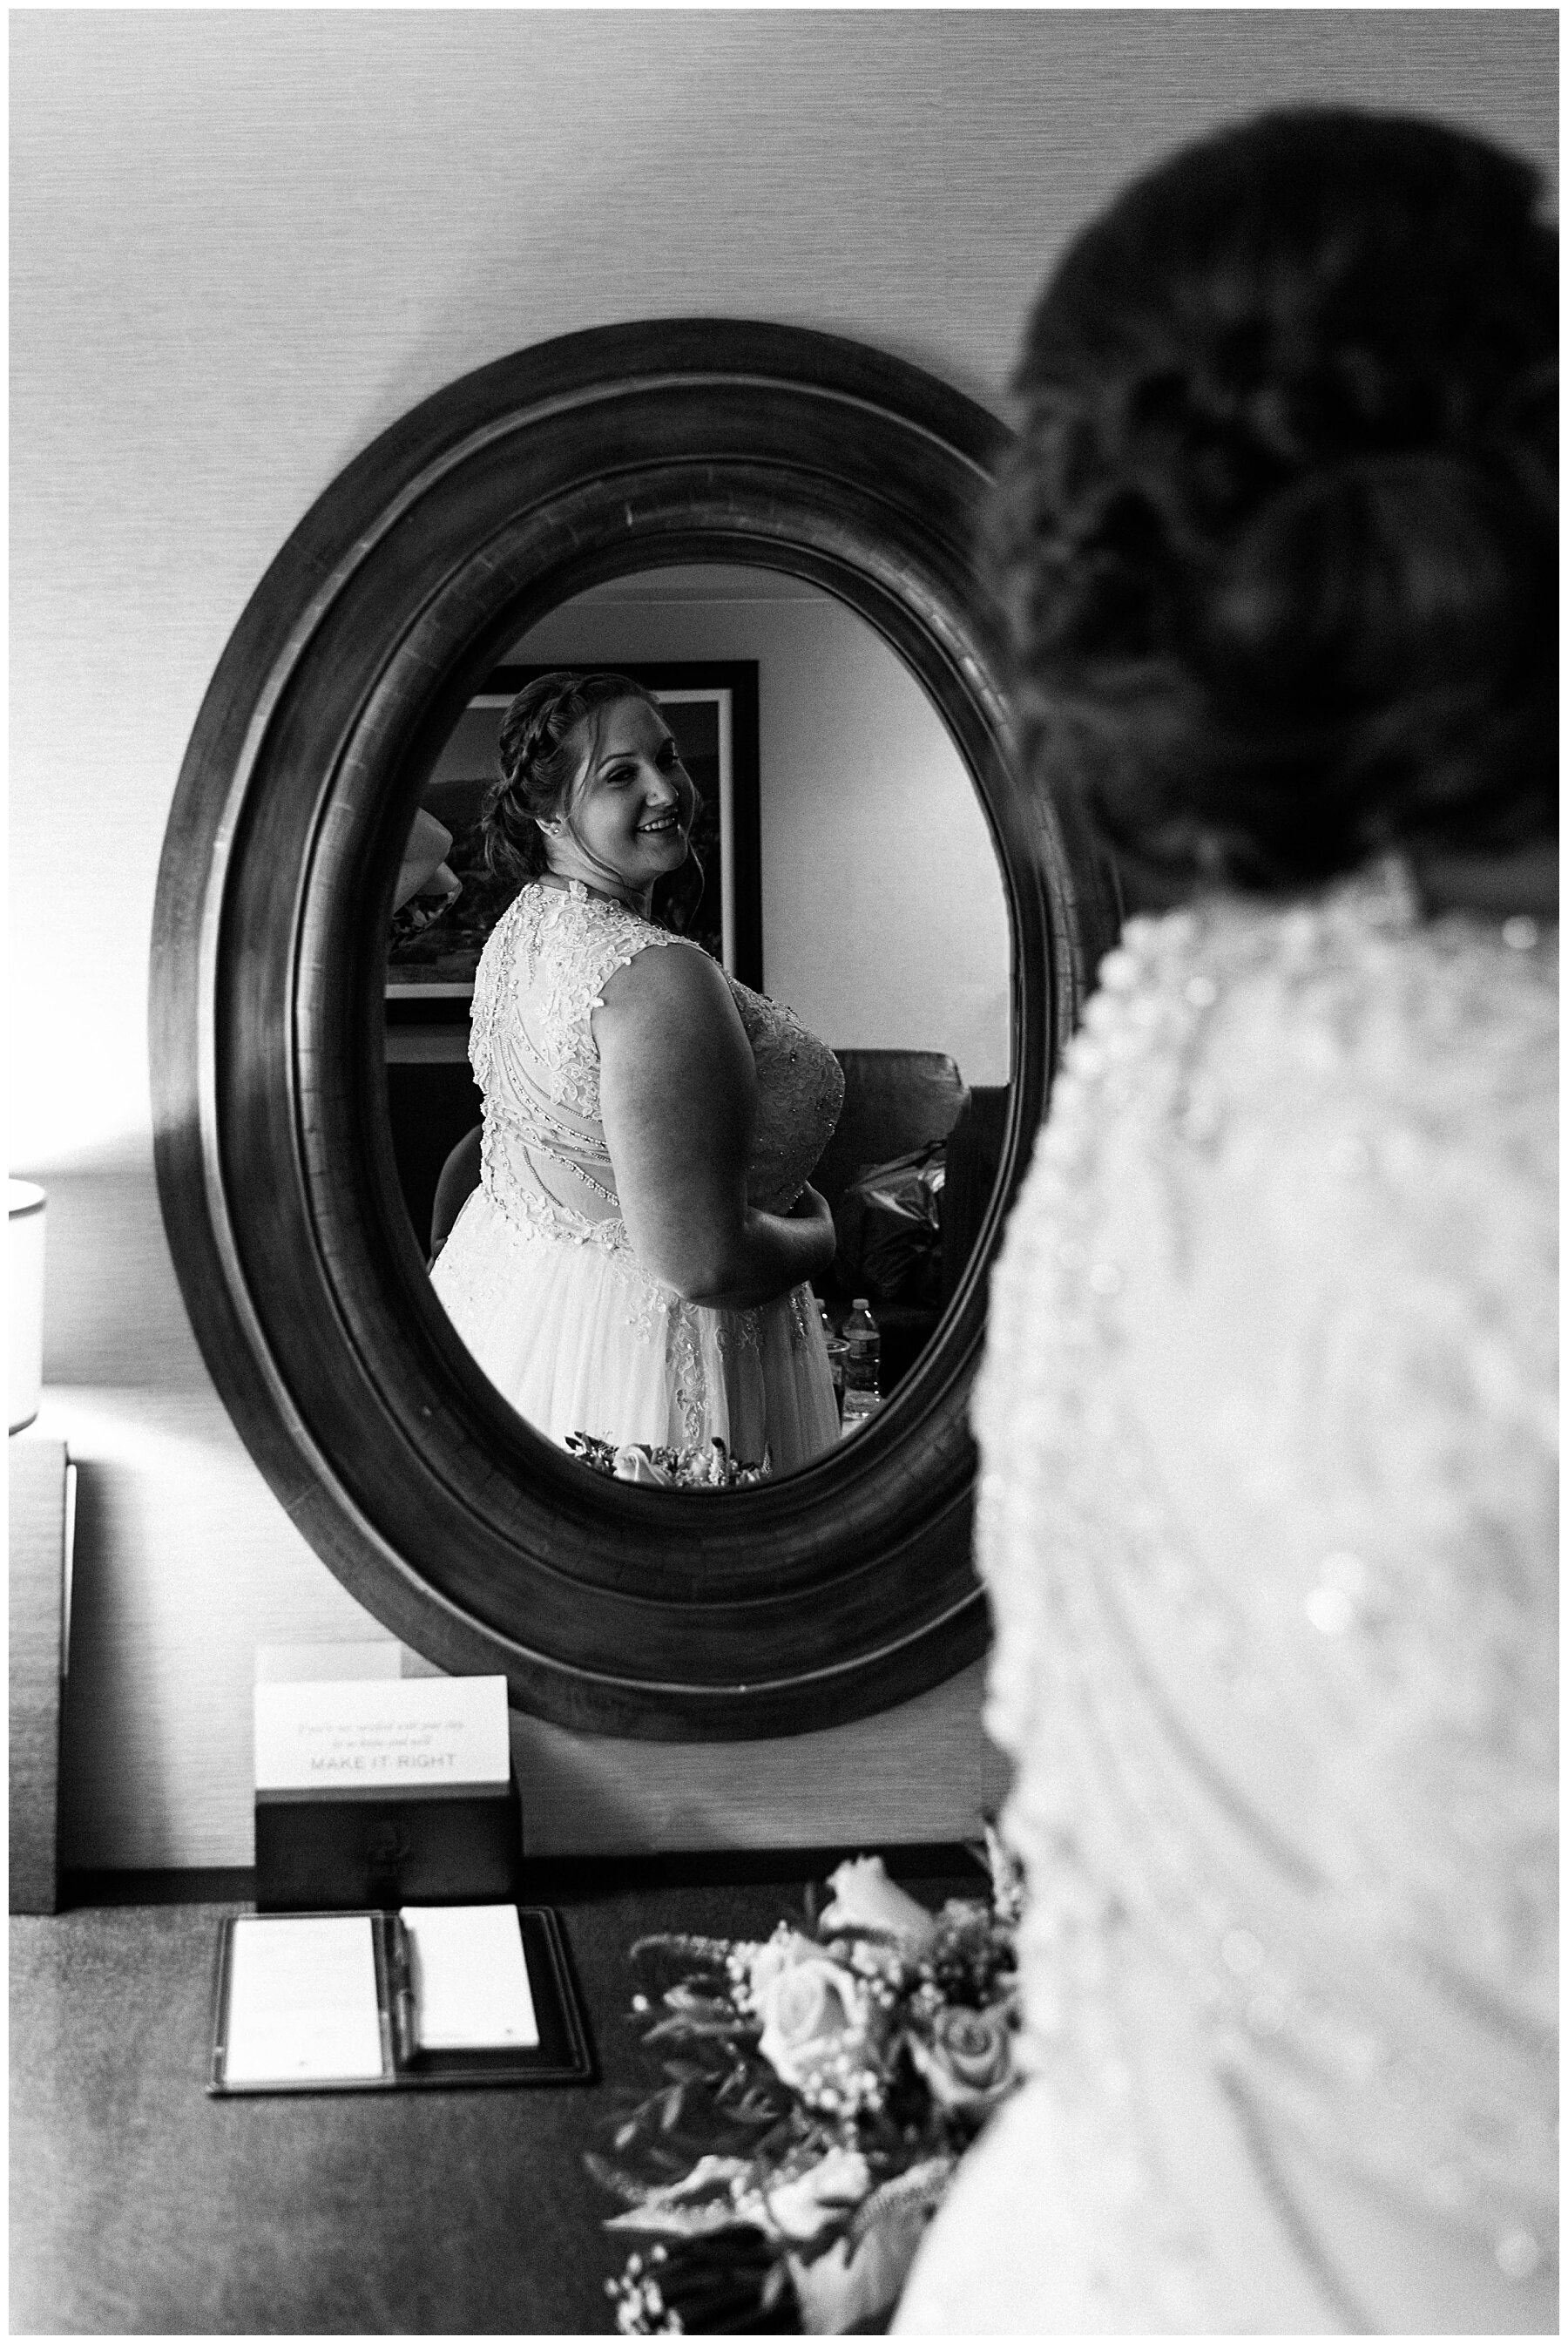 Bridal reflection in mirror